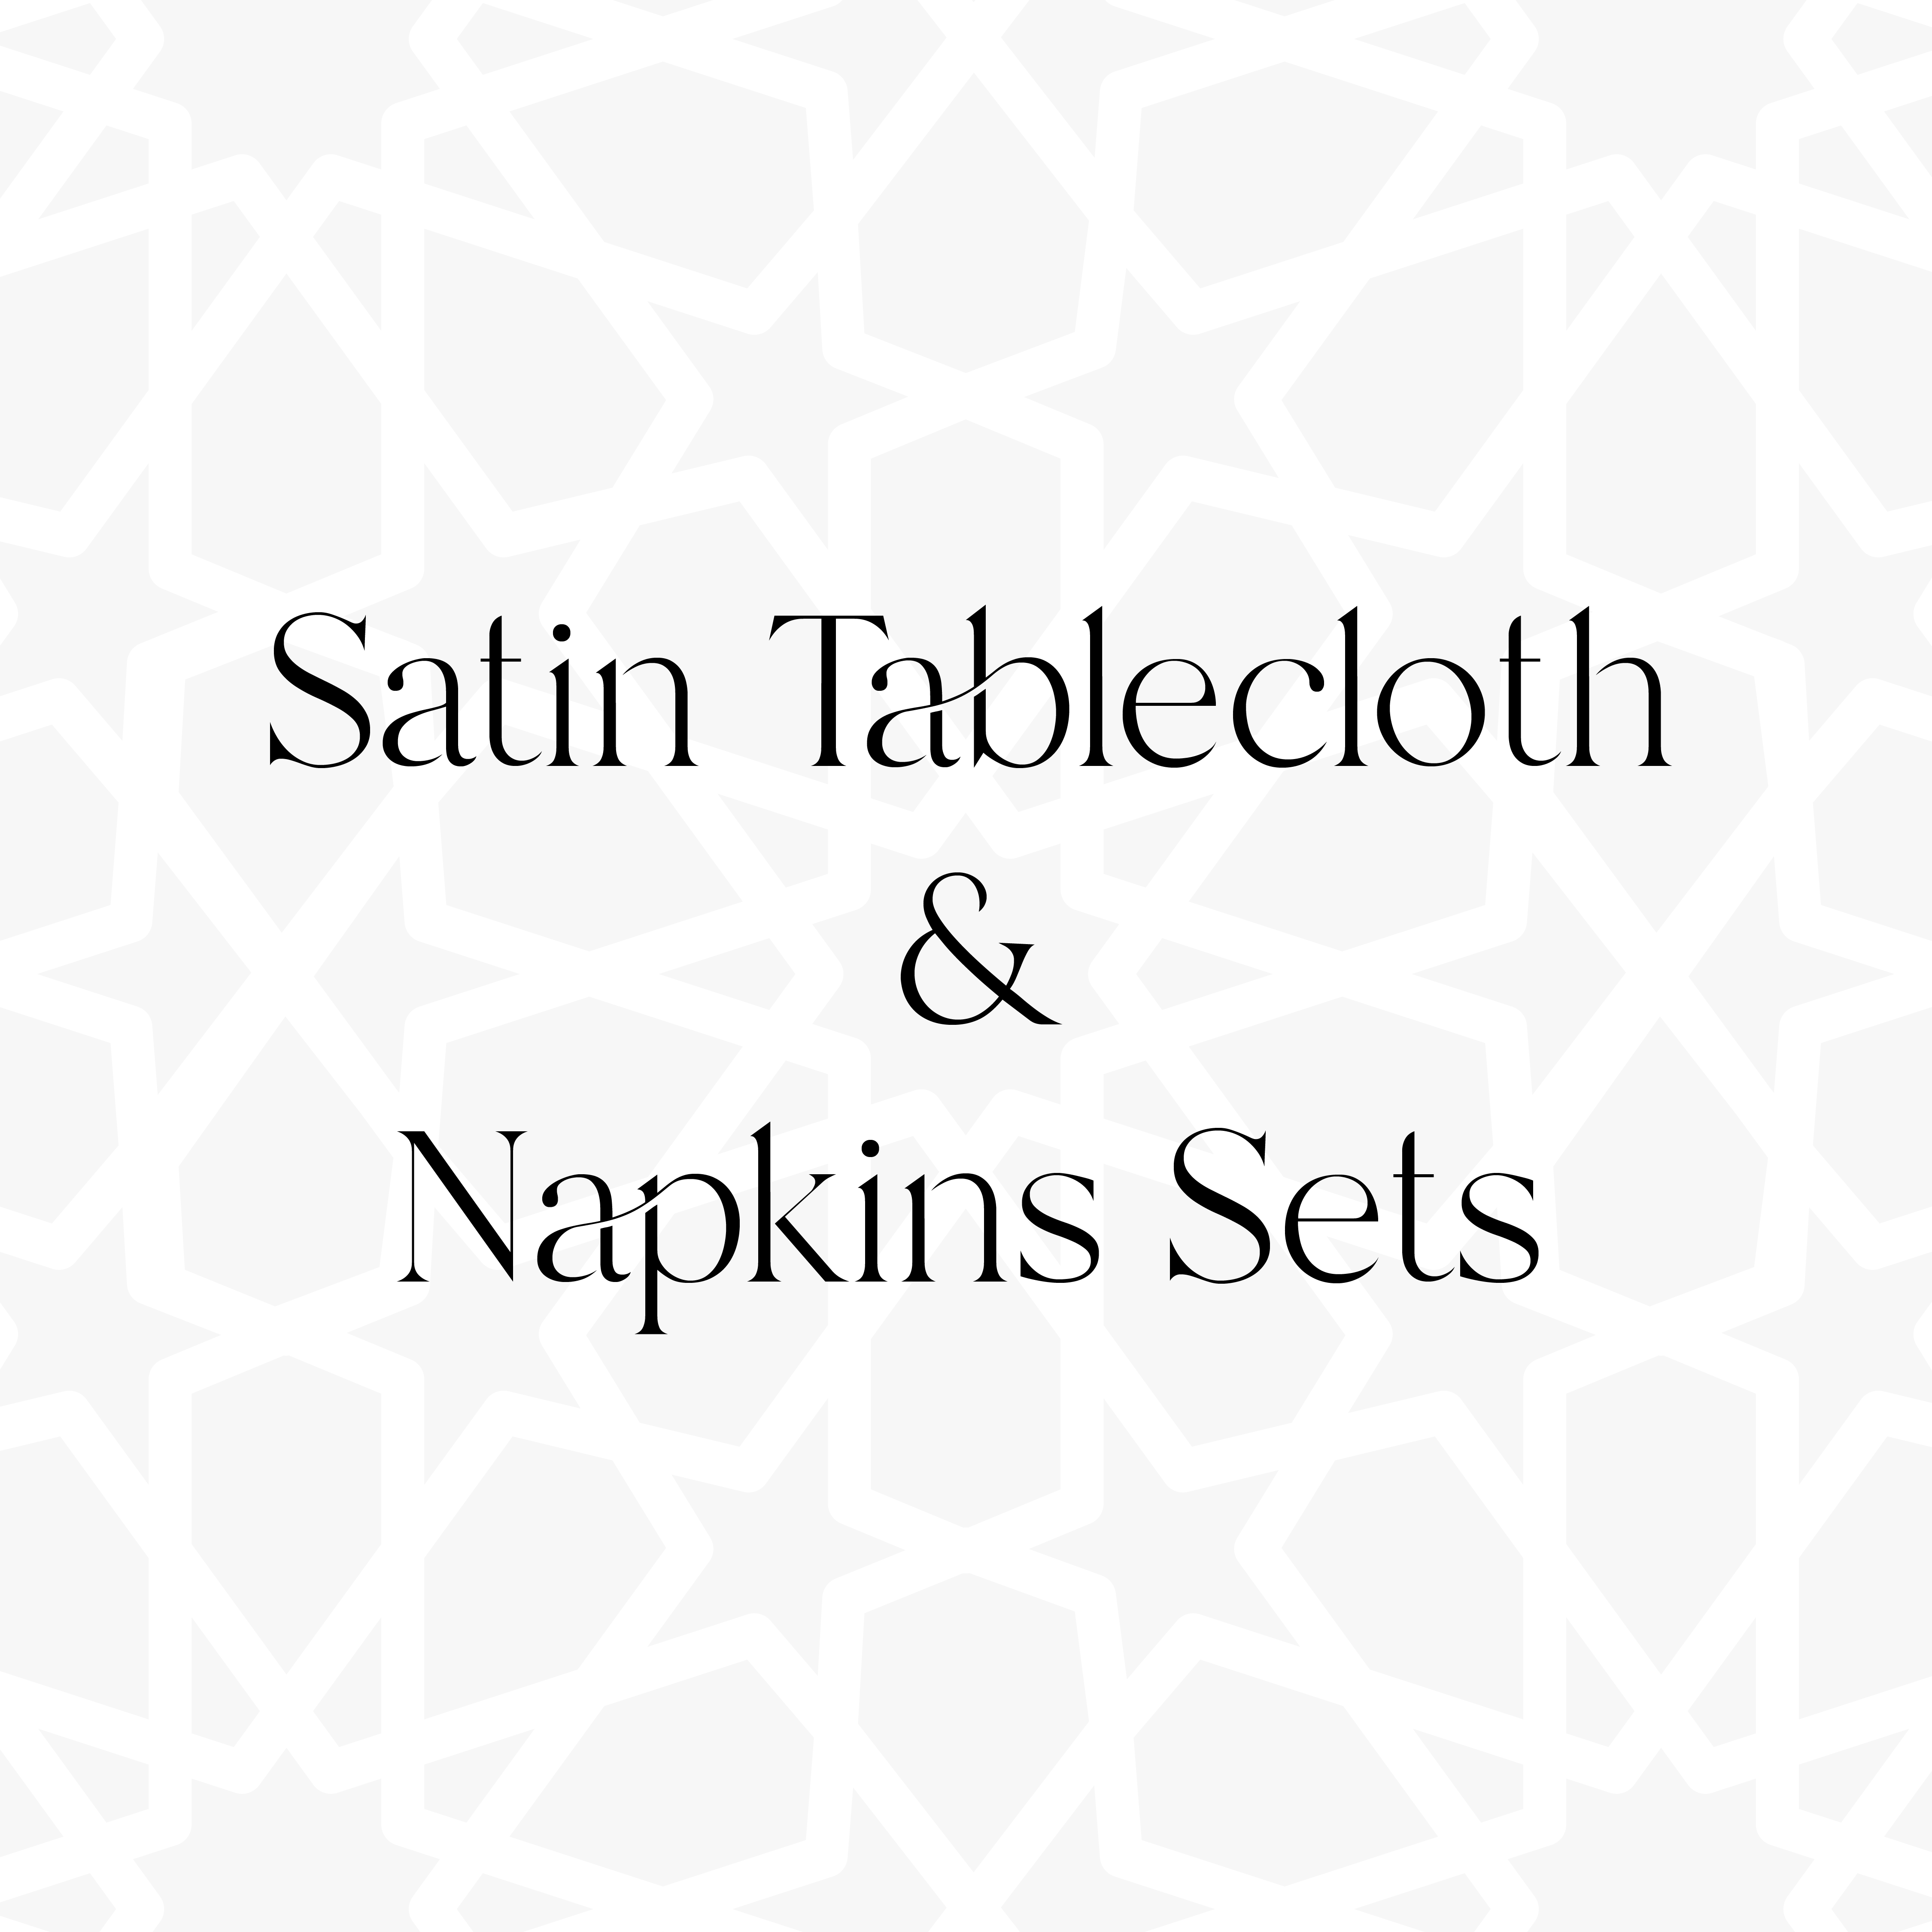 Ramadan Tablecloth & Napkins Sets Collection